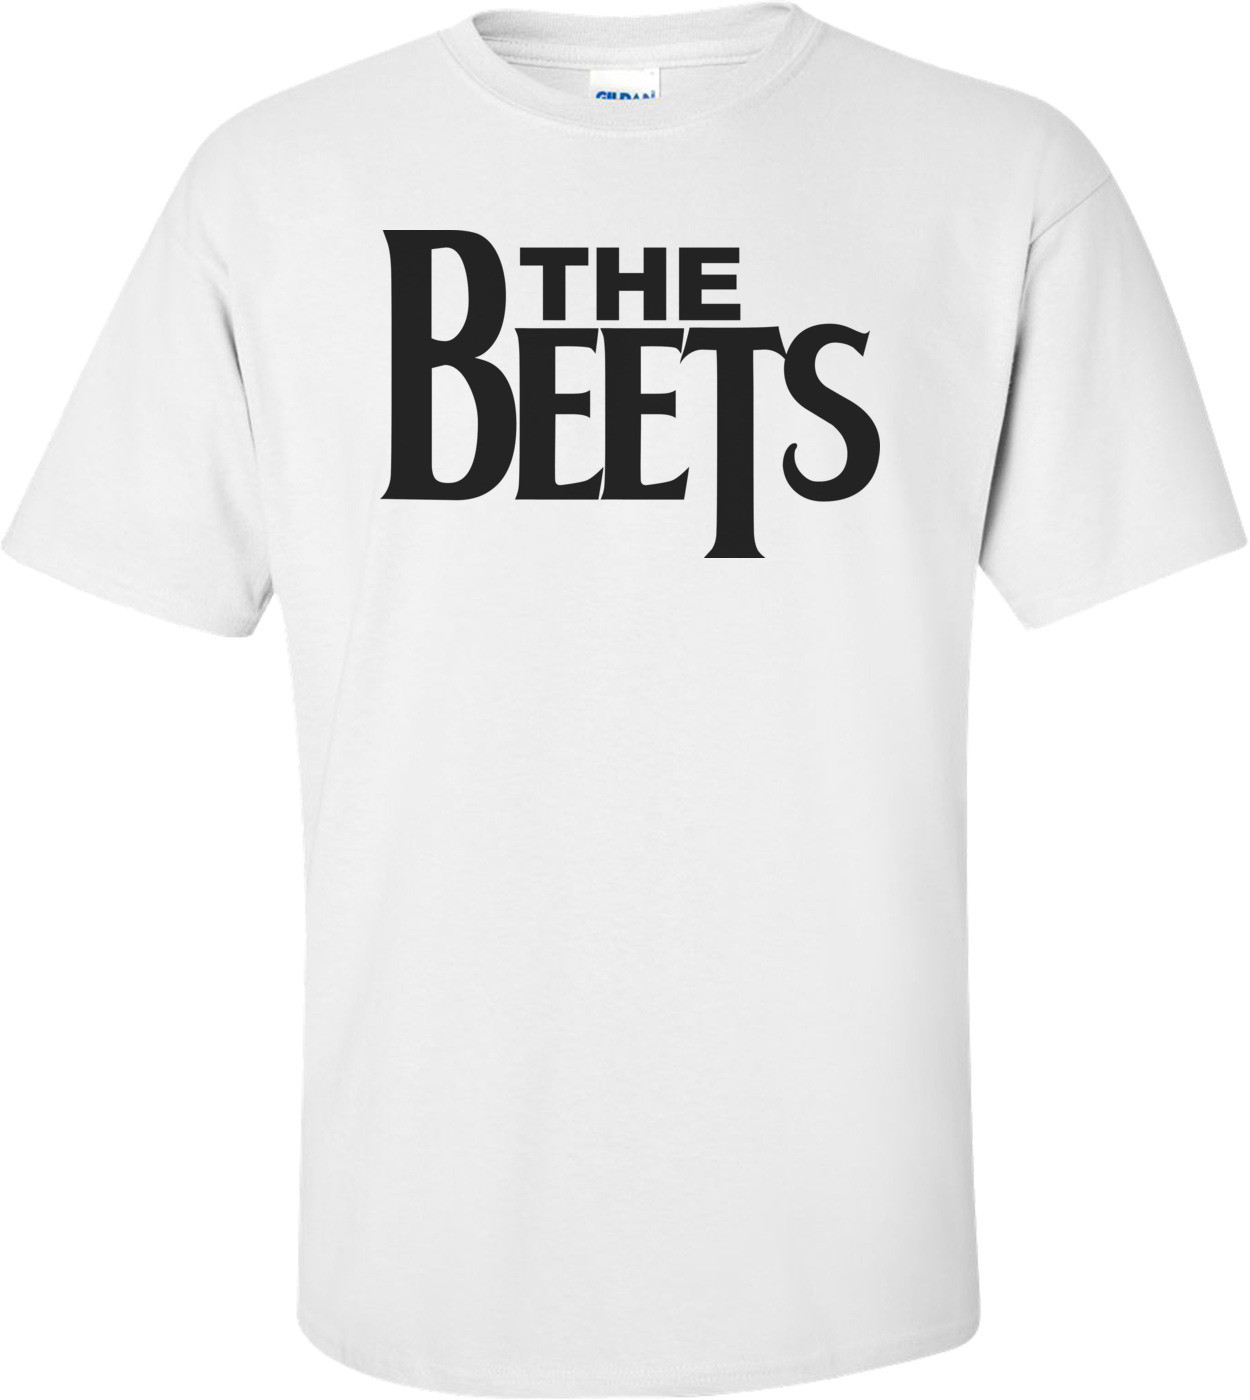 The Beets - Doug T-shirt